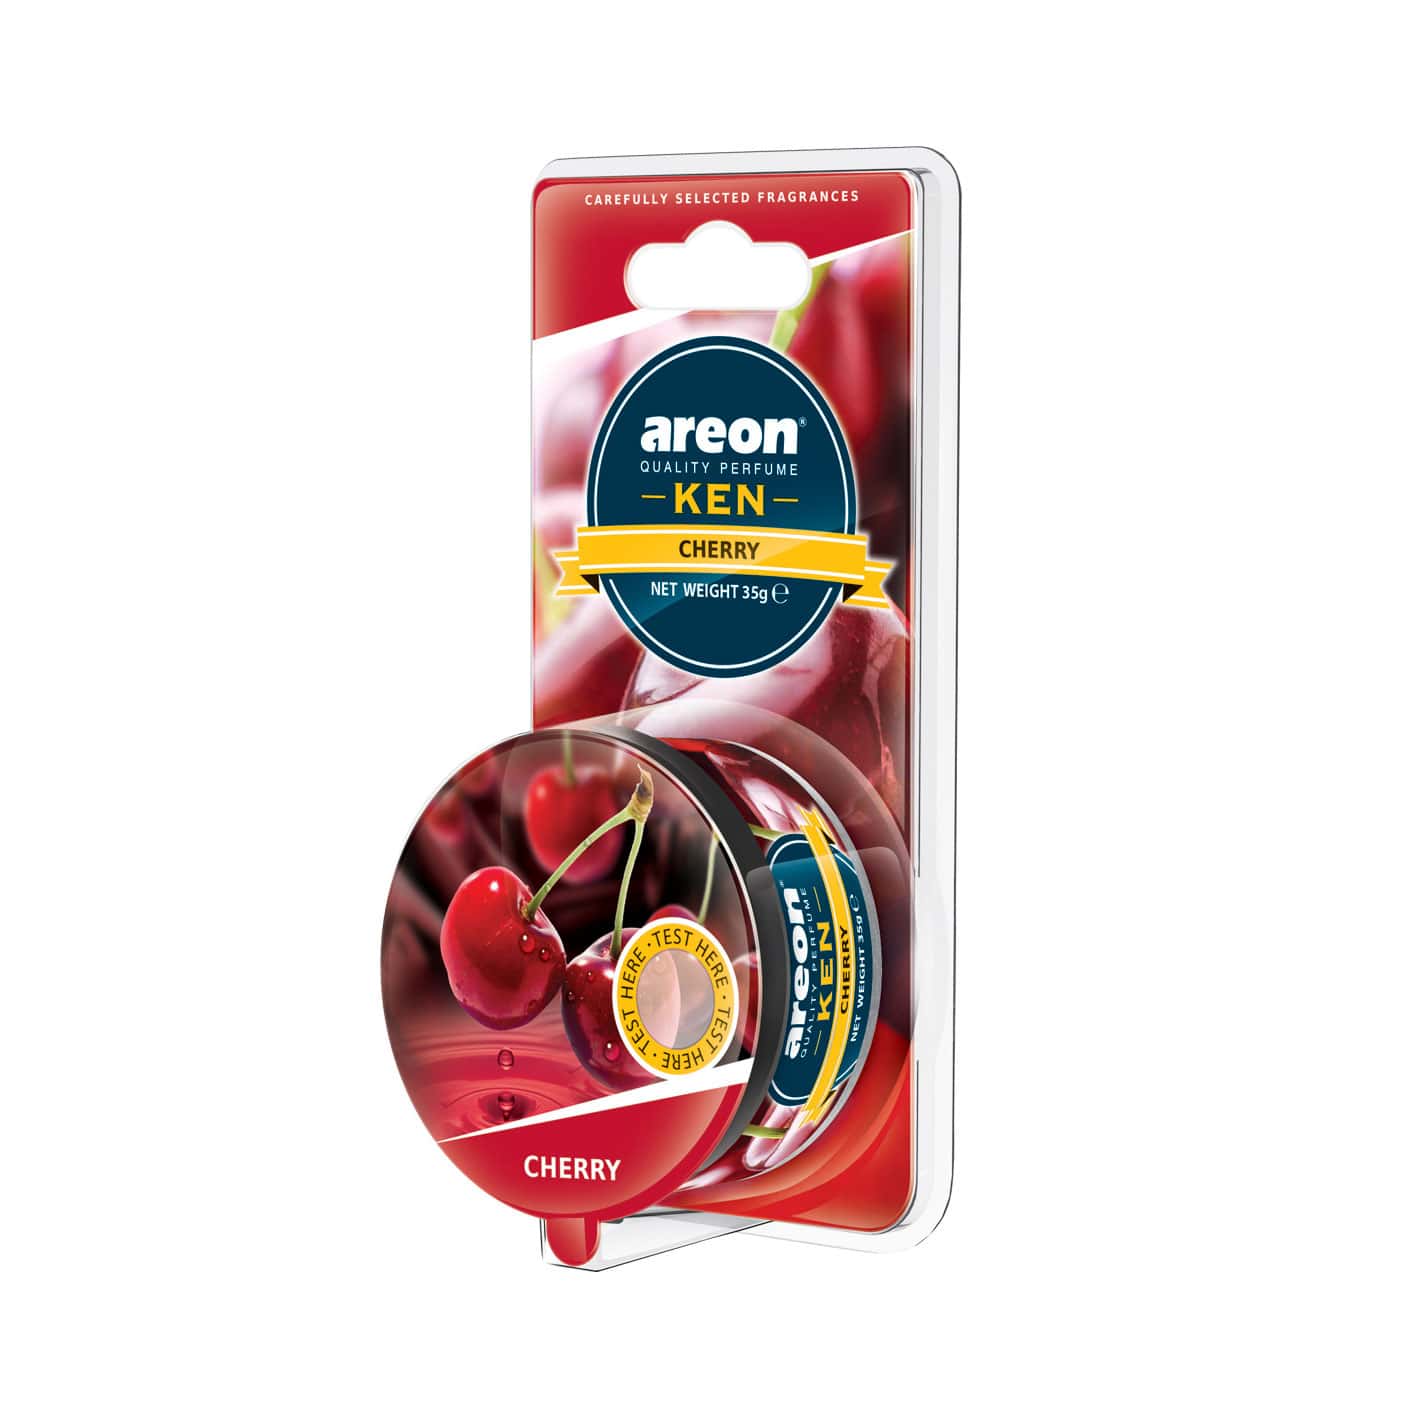 Areon ken perfume - Cherry Scent